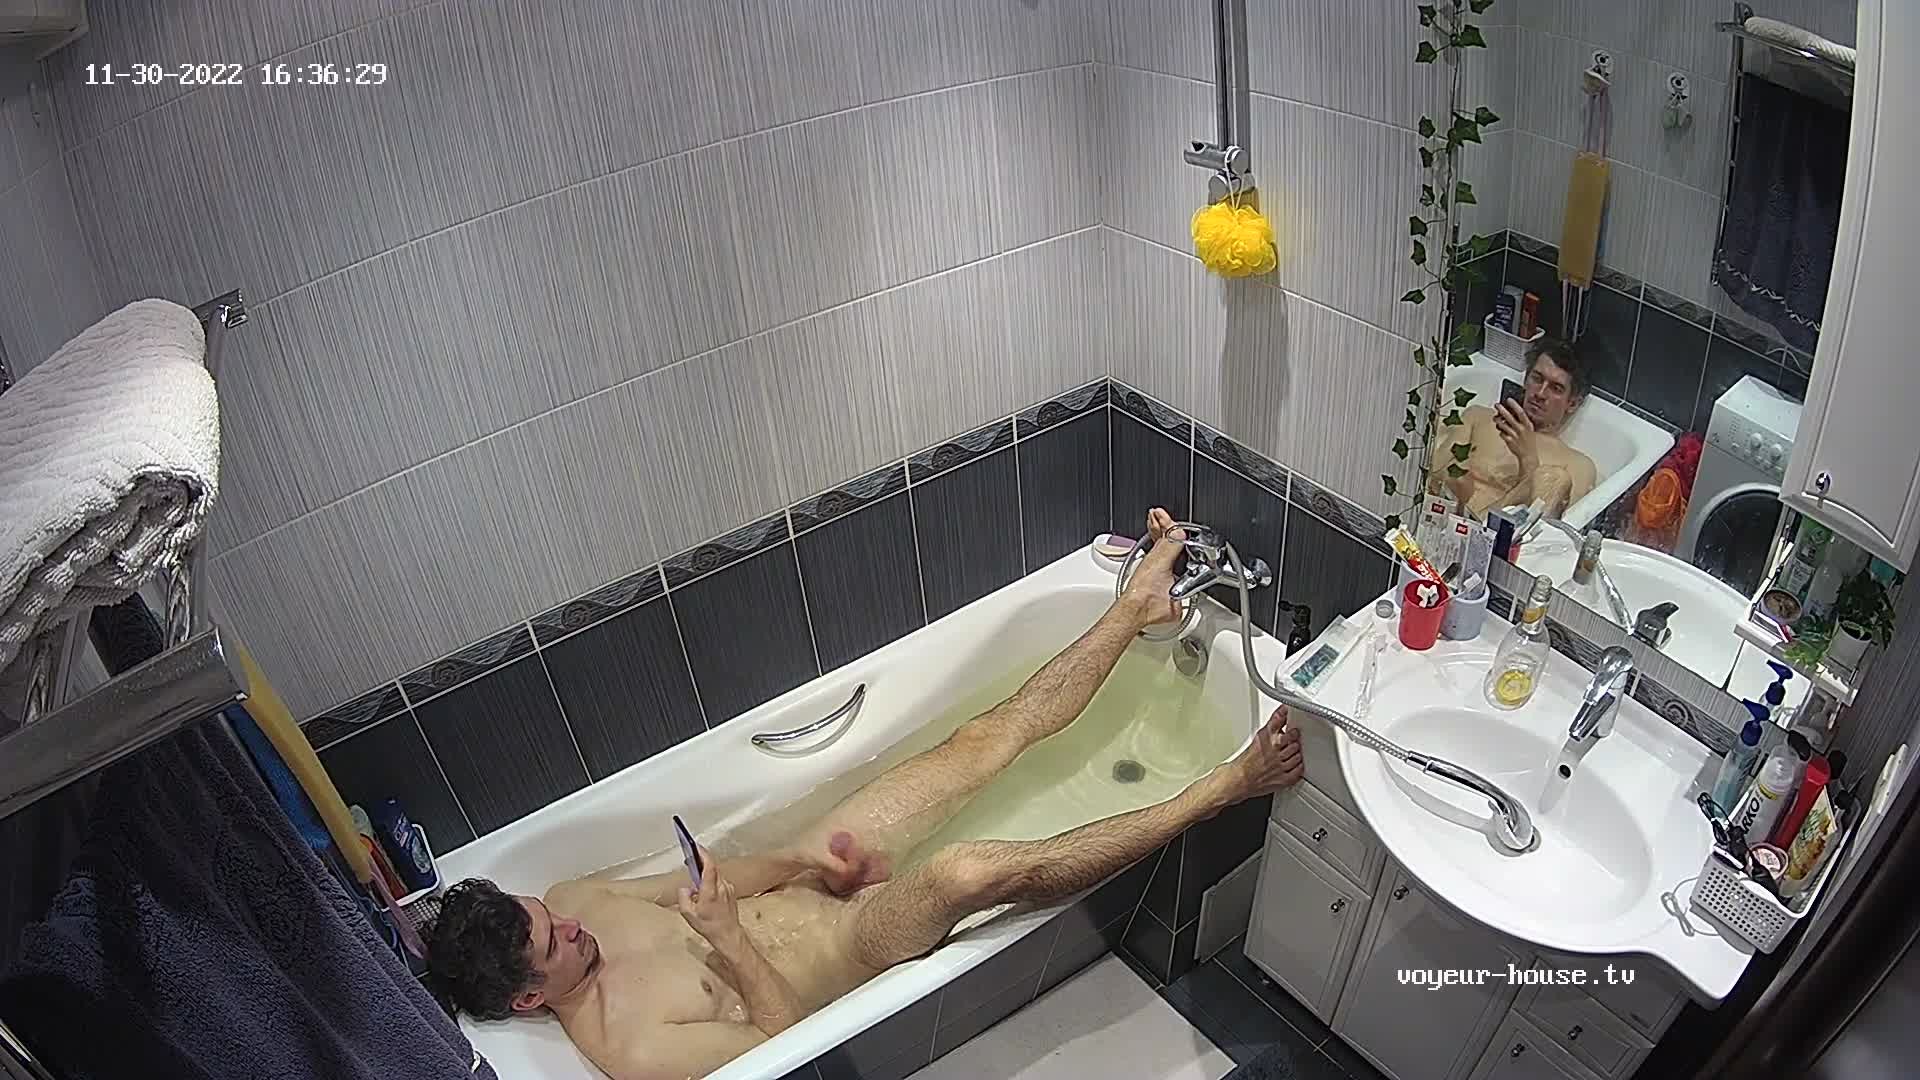 Sebastian long bath & jerking 30 Nov 2022